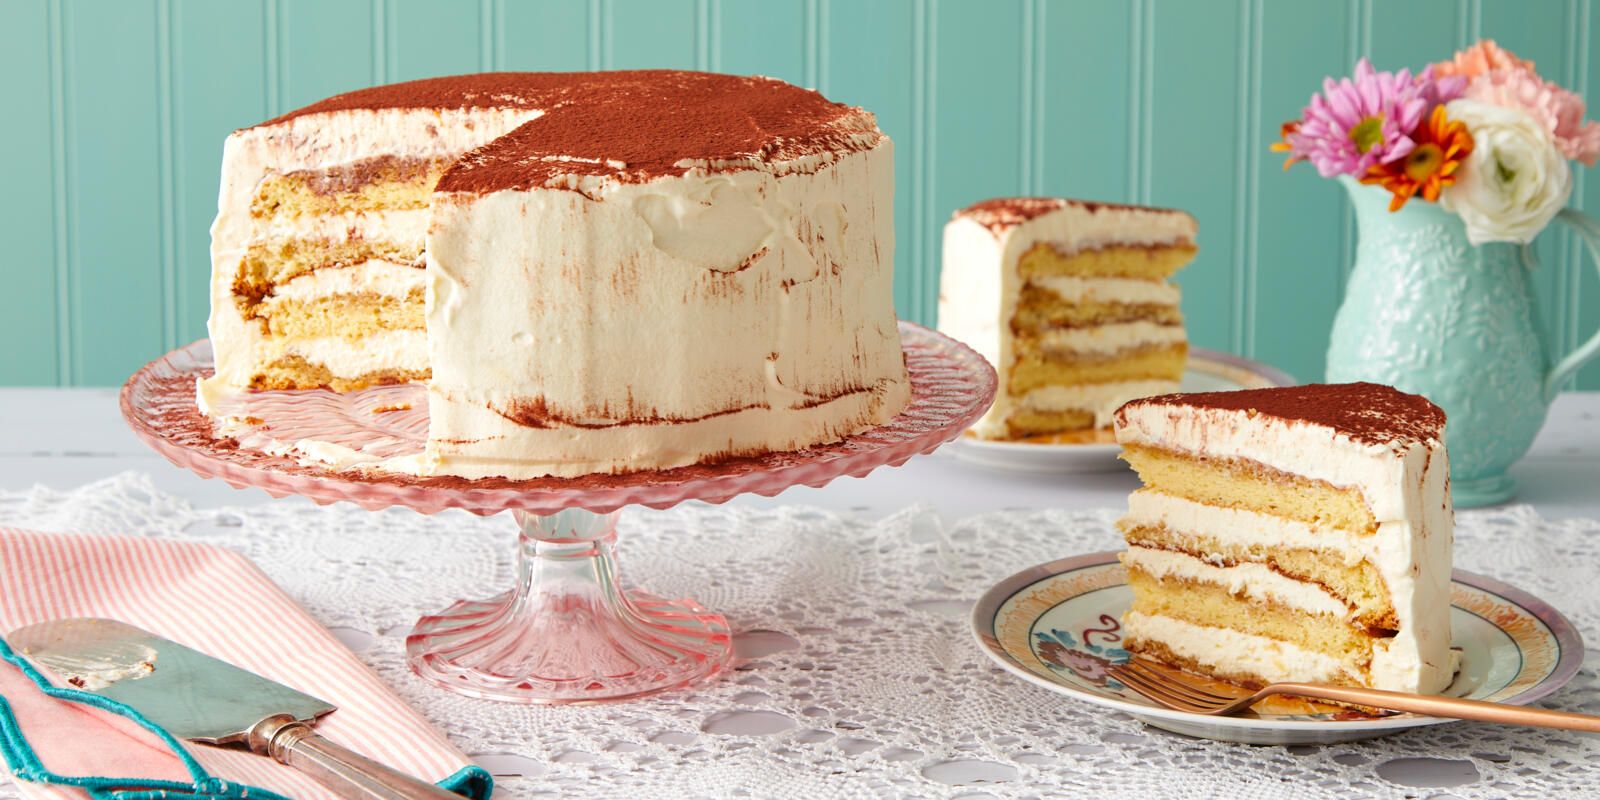 Tiramisu Cake Recipe - How to Make Tiramisu Cake